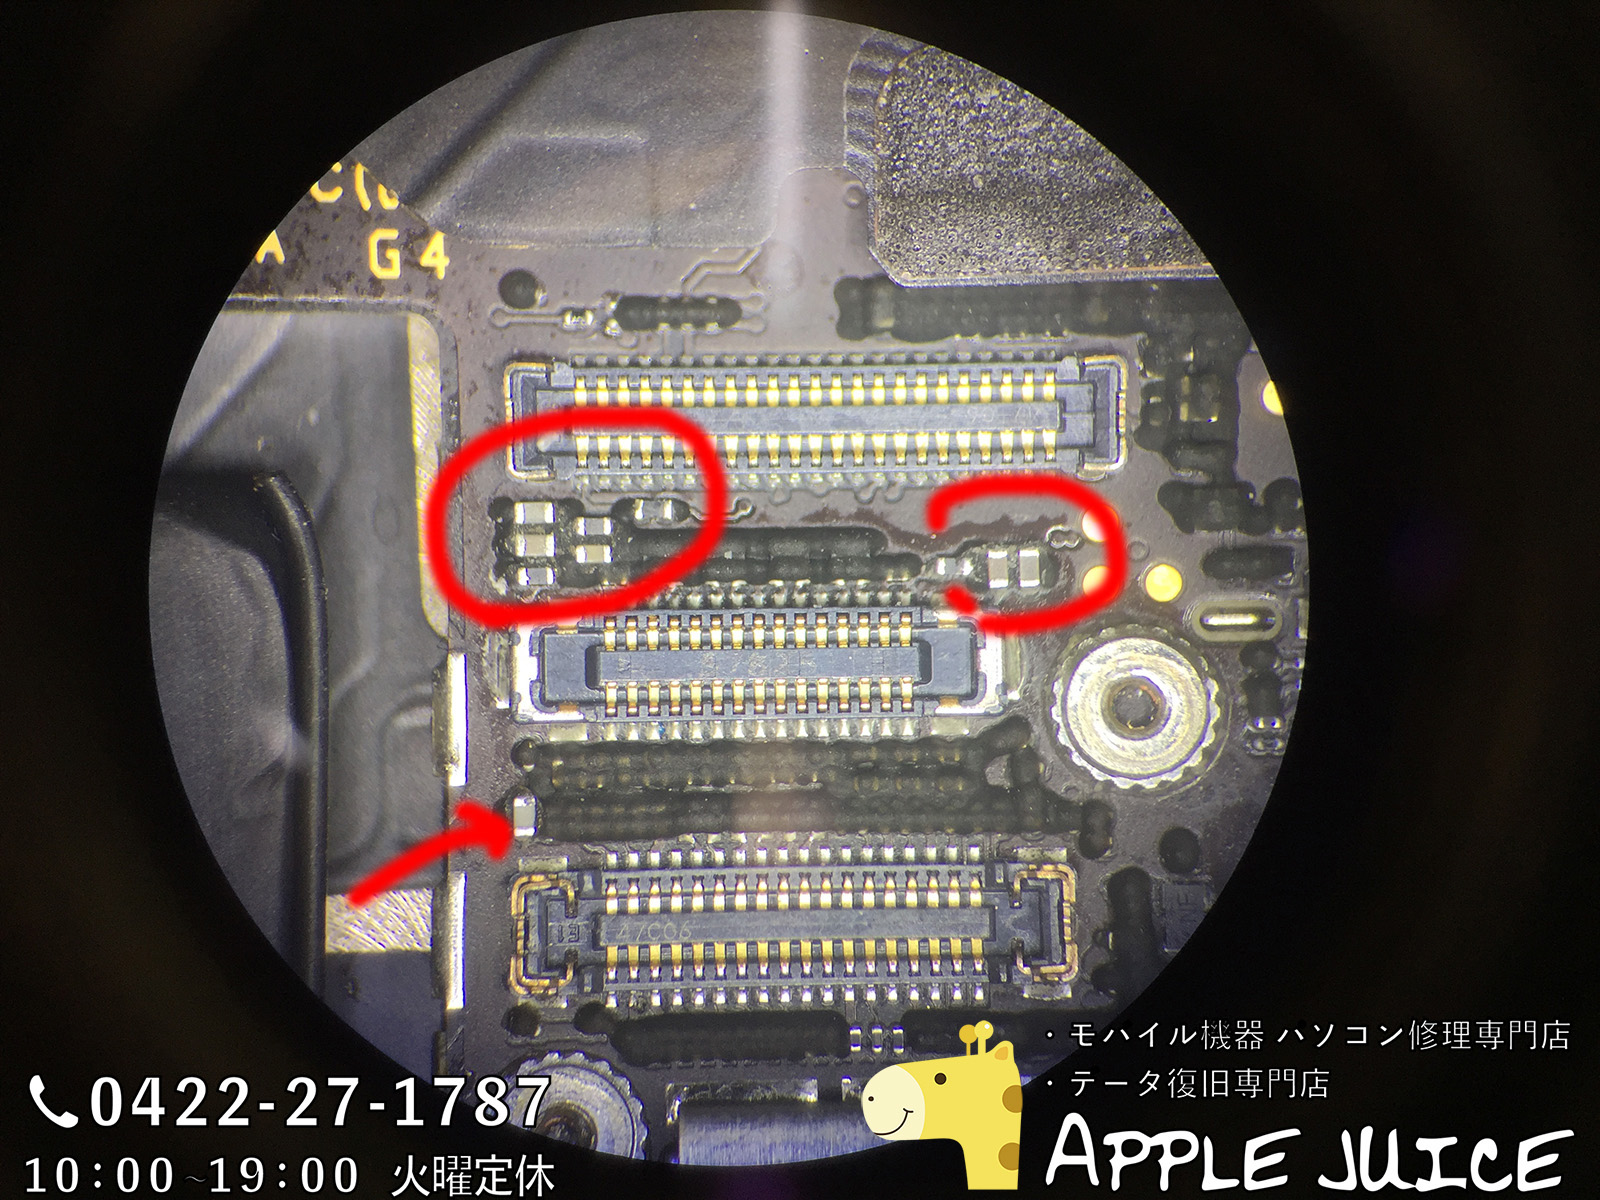 Iphone6の液晶表示不良 画面が映らない端末の基板 基盤 修理 他店で修理不可のアイフォンもデータ復旧 救出 Iphone Ipad Ipod Mac修理 データ復旧 基板修理 Applejuice吉祥寺店